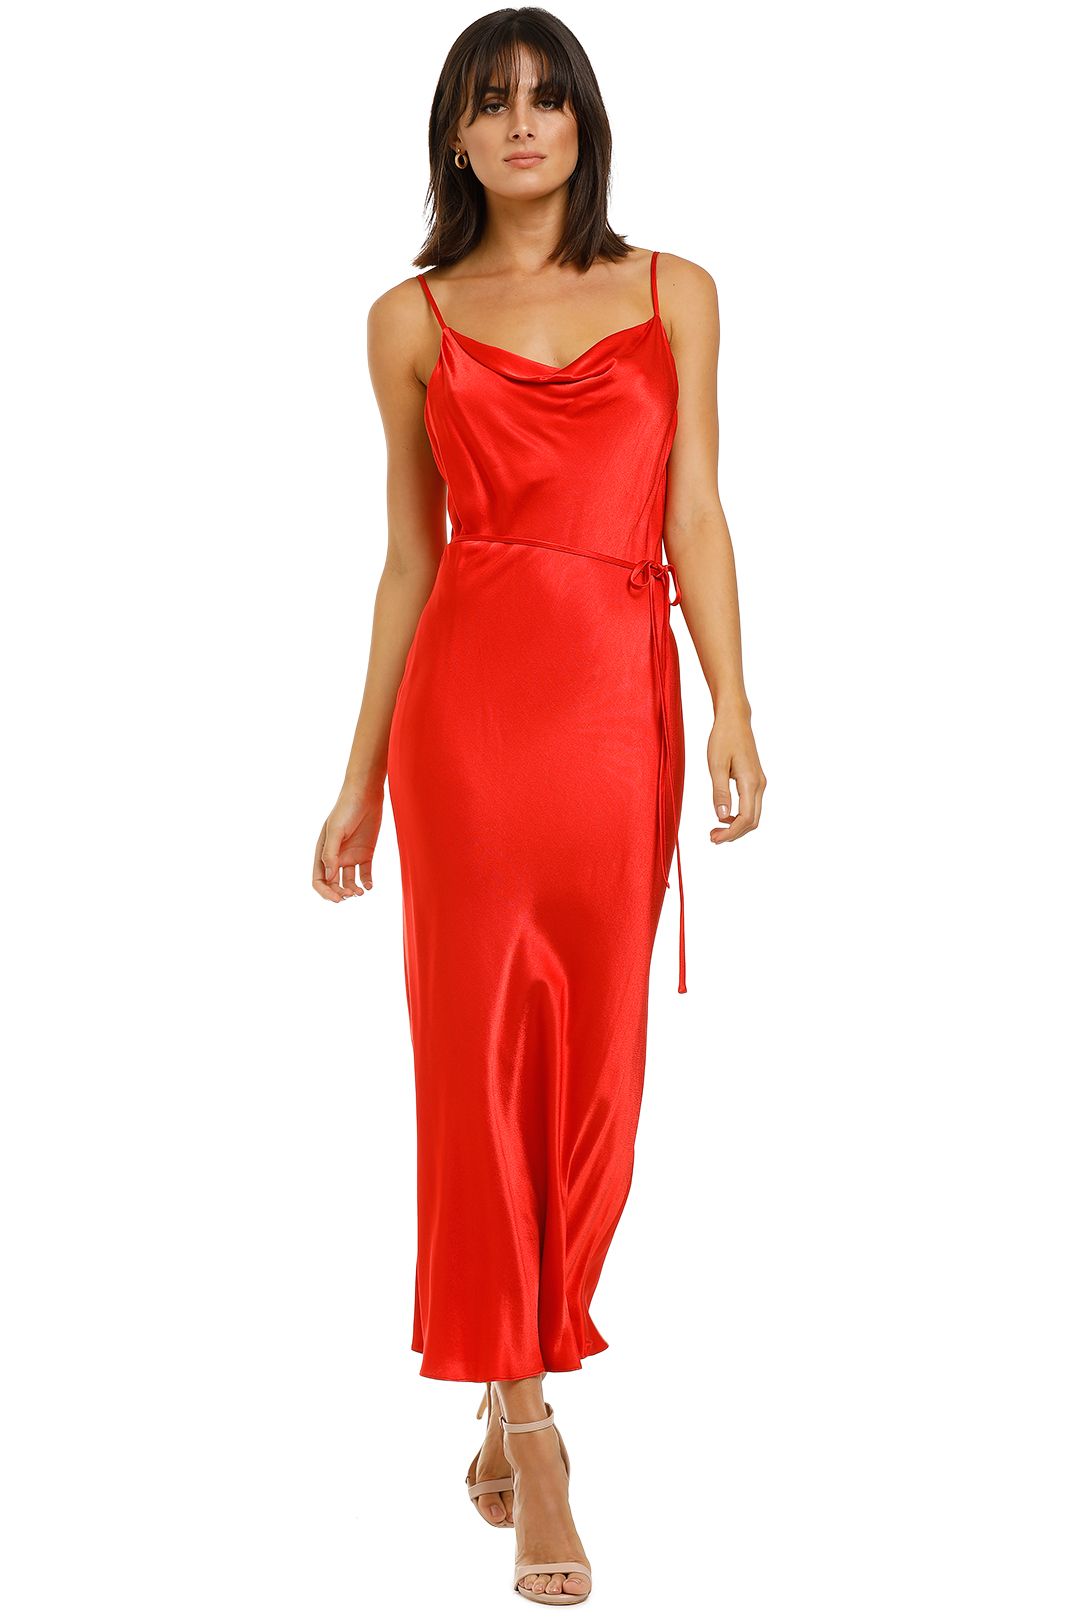 Shona-Joy-Bias-Slip-Dress-Red-Front